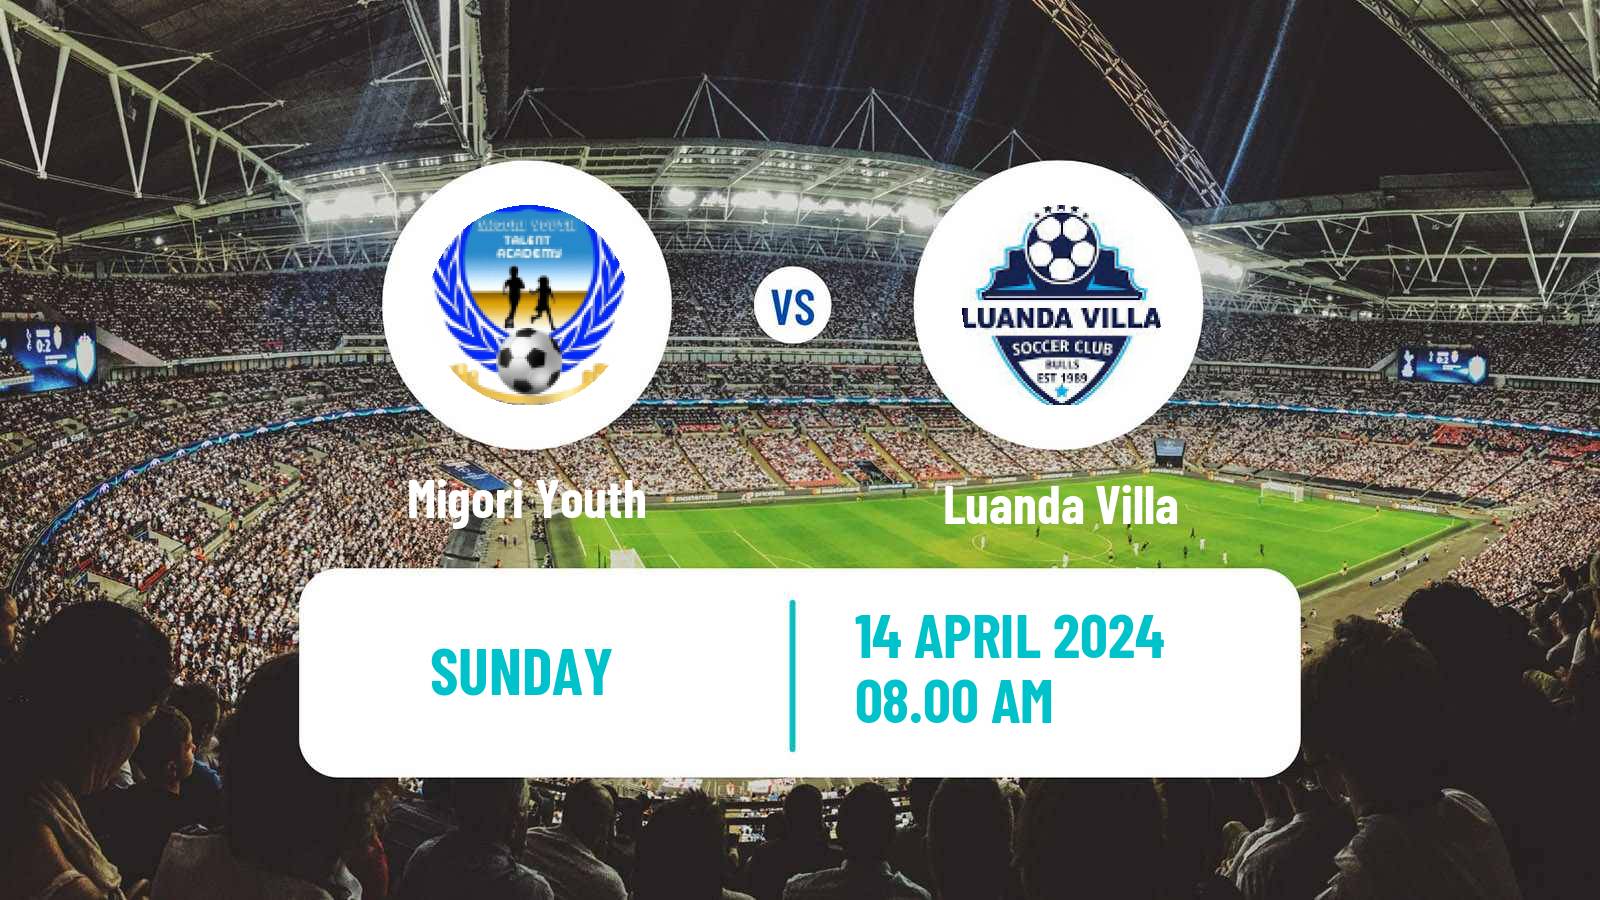 Soccer Kenyan Super League Migori Youth - Luanda Villa